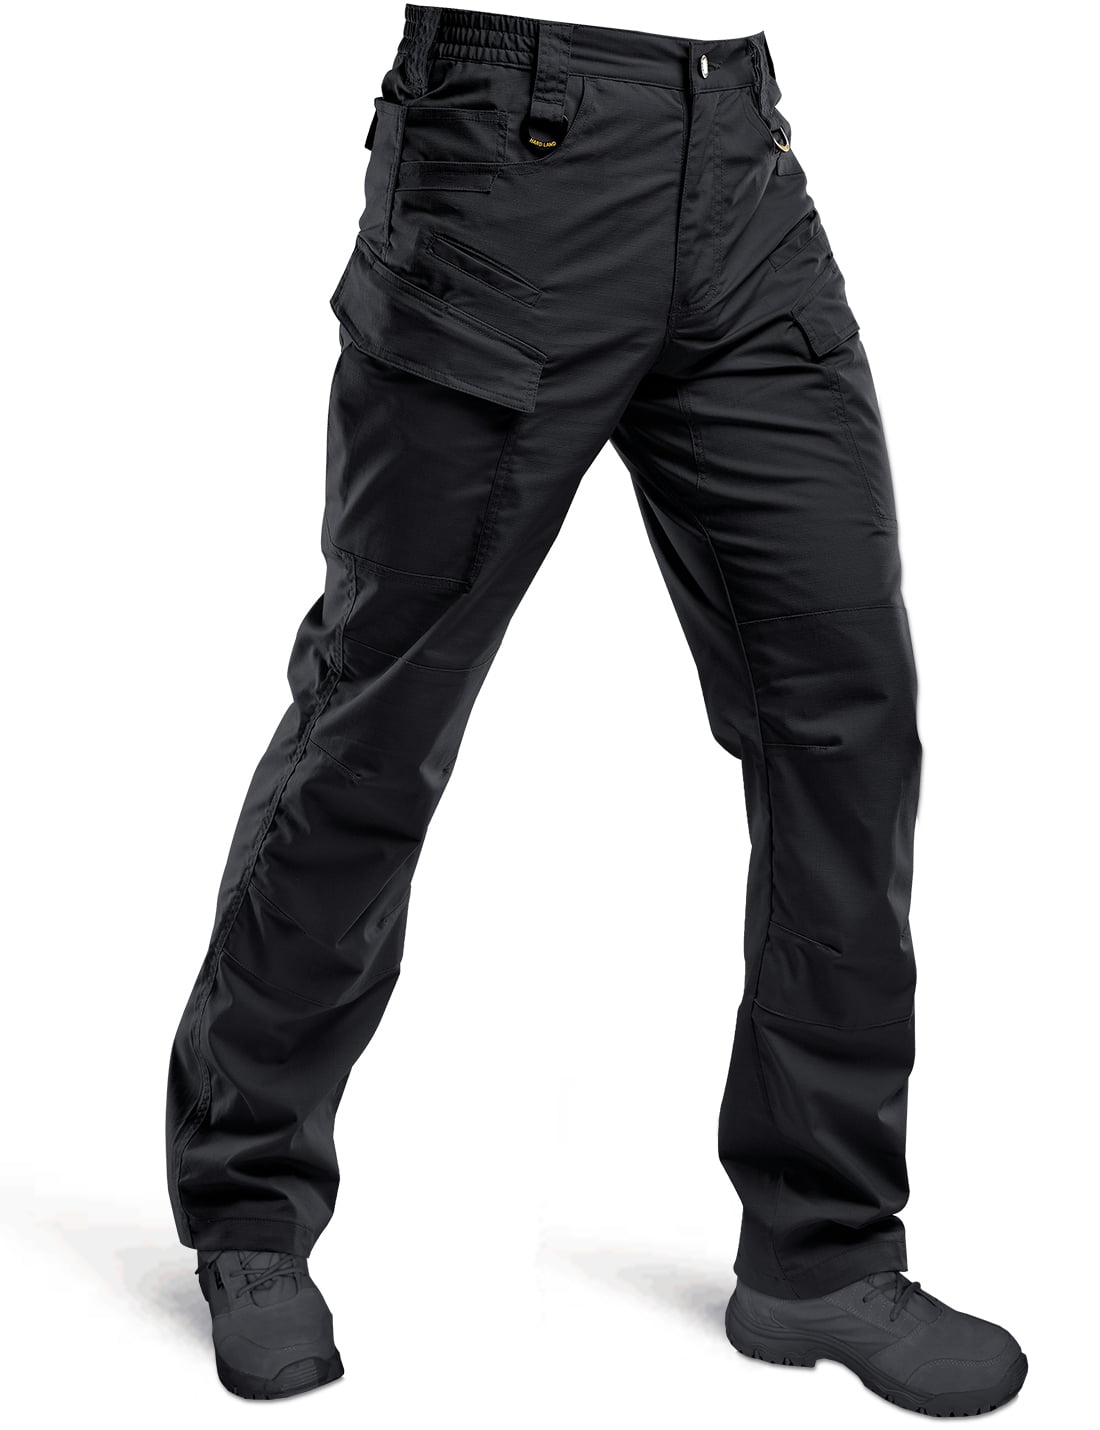 Relaude Fitness Men's Outdoor Cargo Work Pants Rip-Stop Military Tactical Pants Lightweight Casual Cargo Pants Men